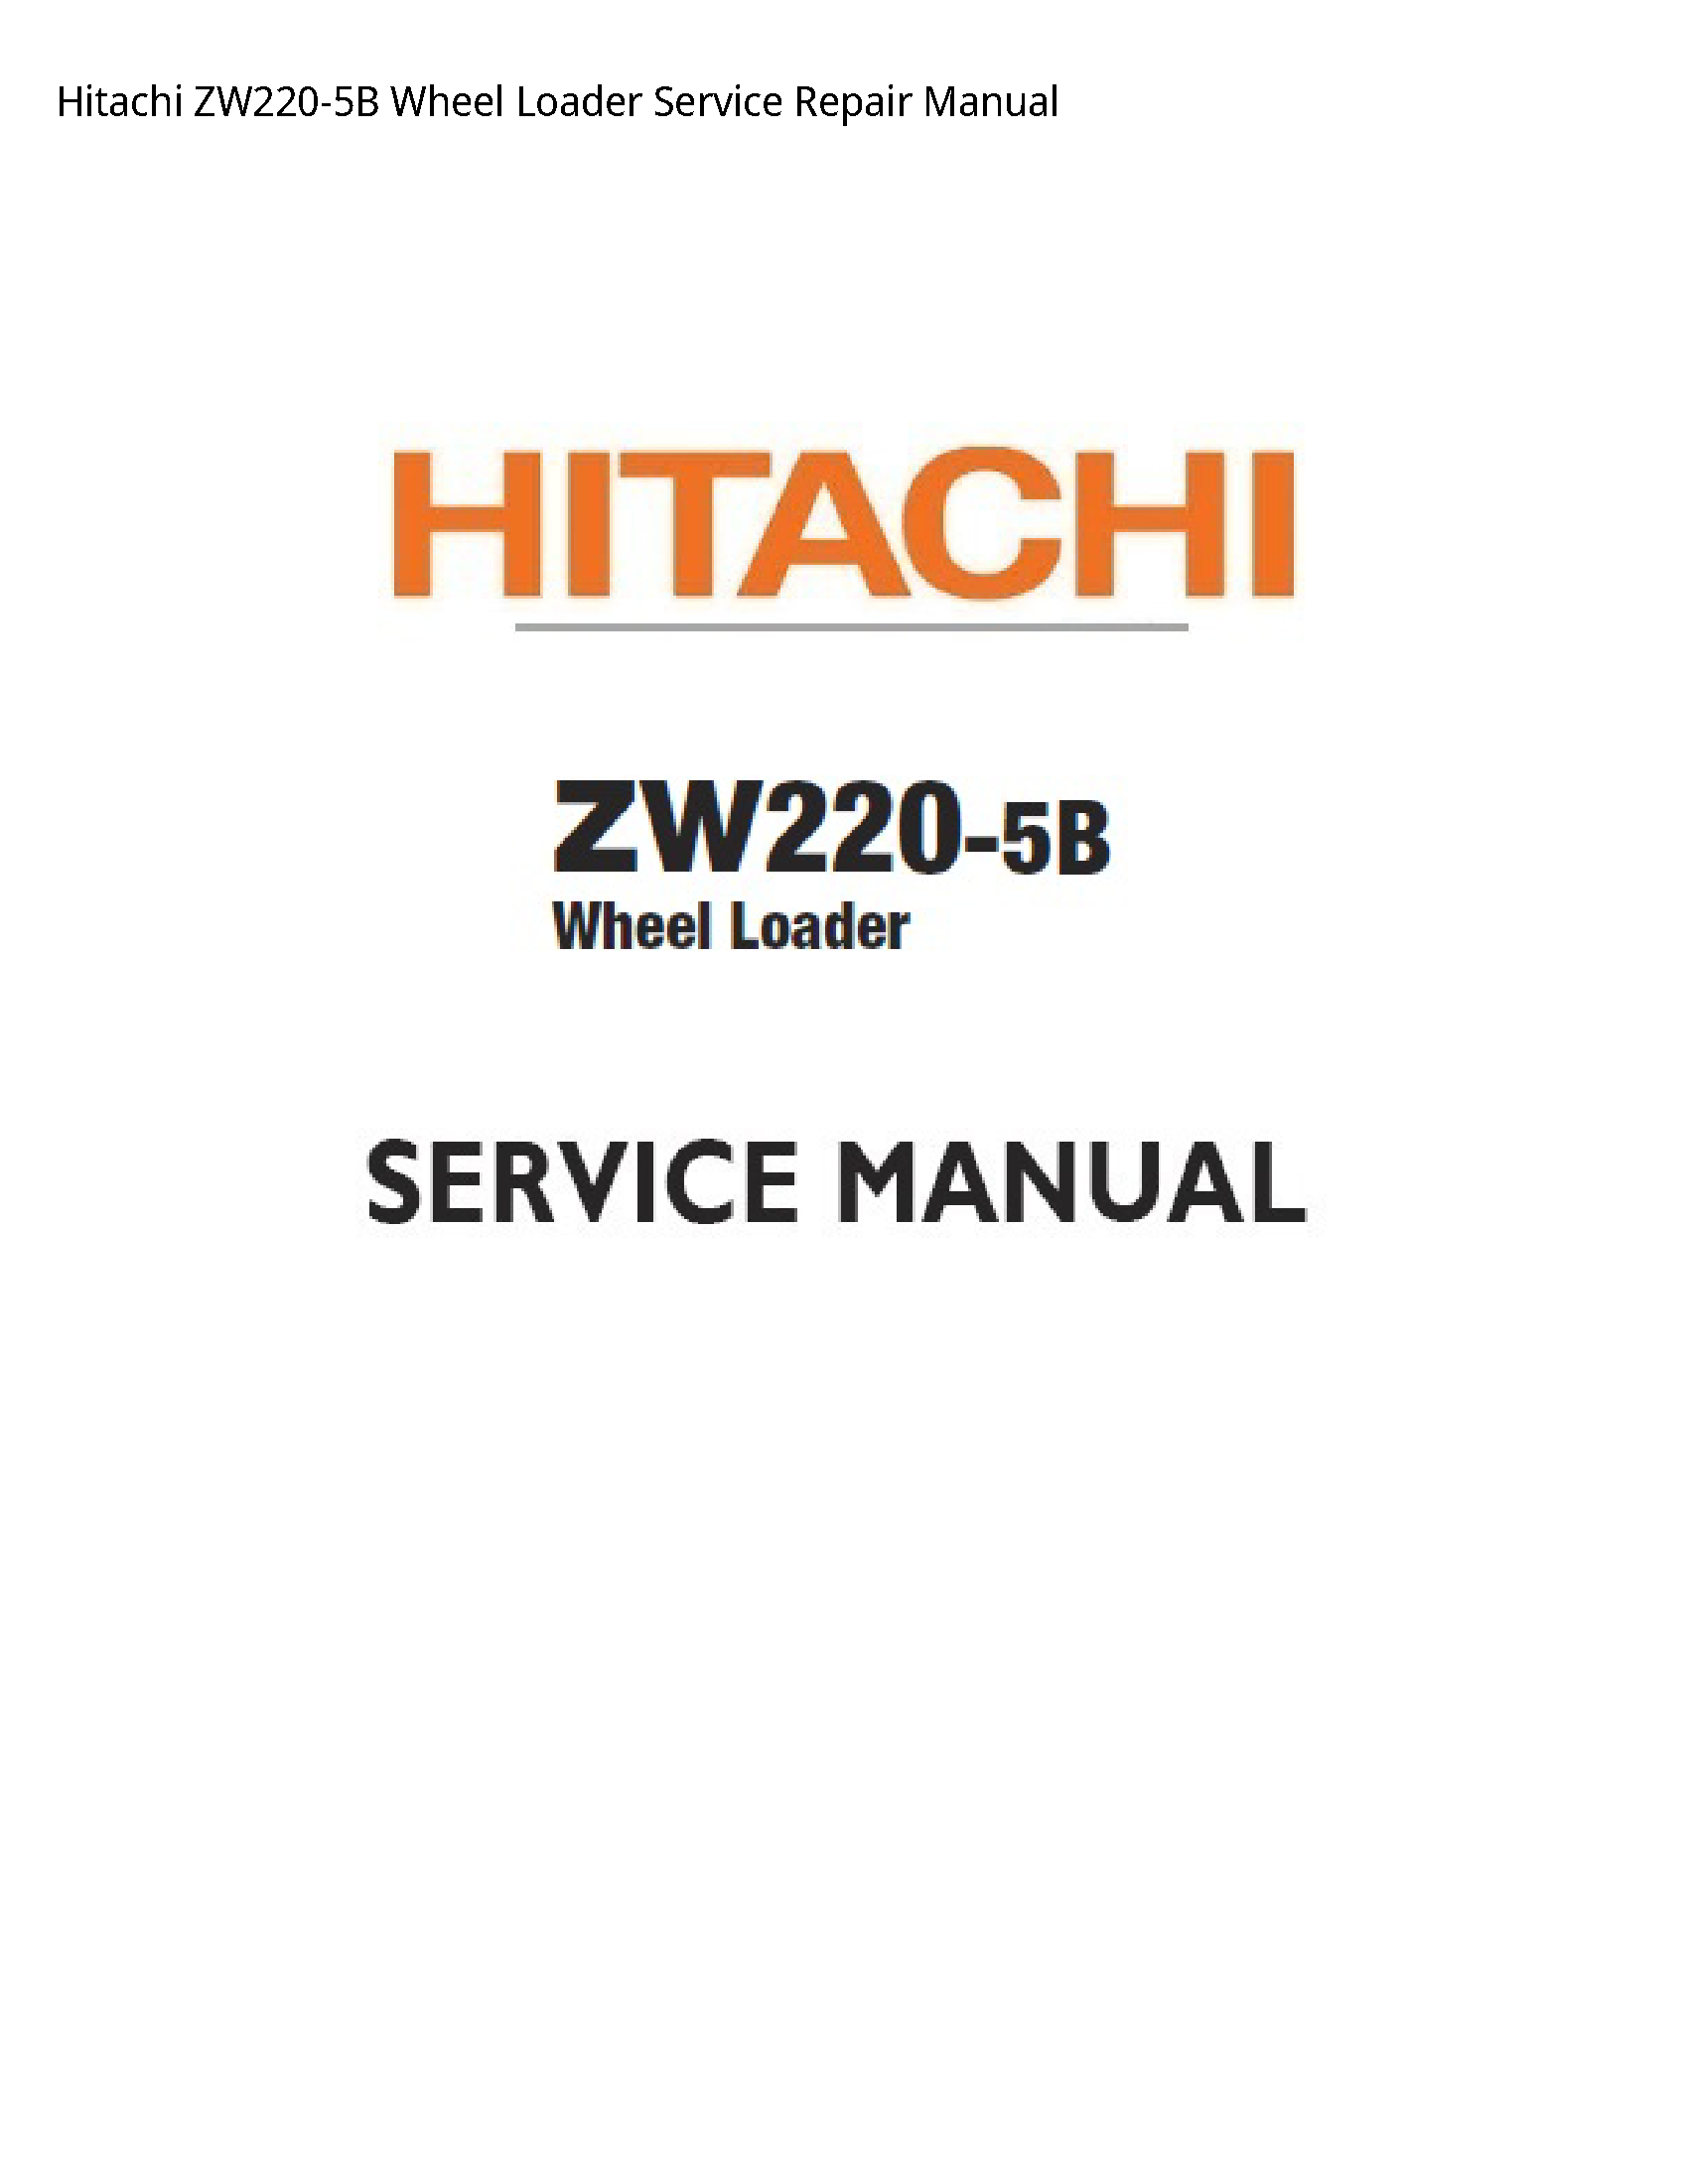 Hitachi ZW220-5B Wheel Loader manual